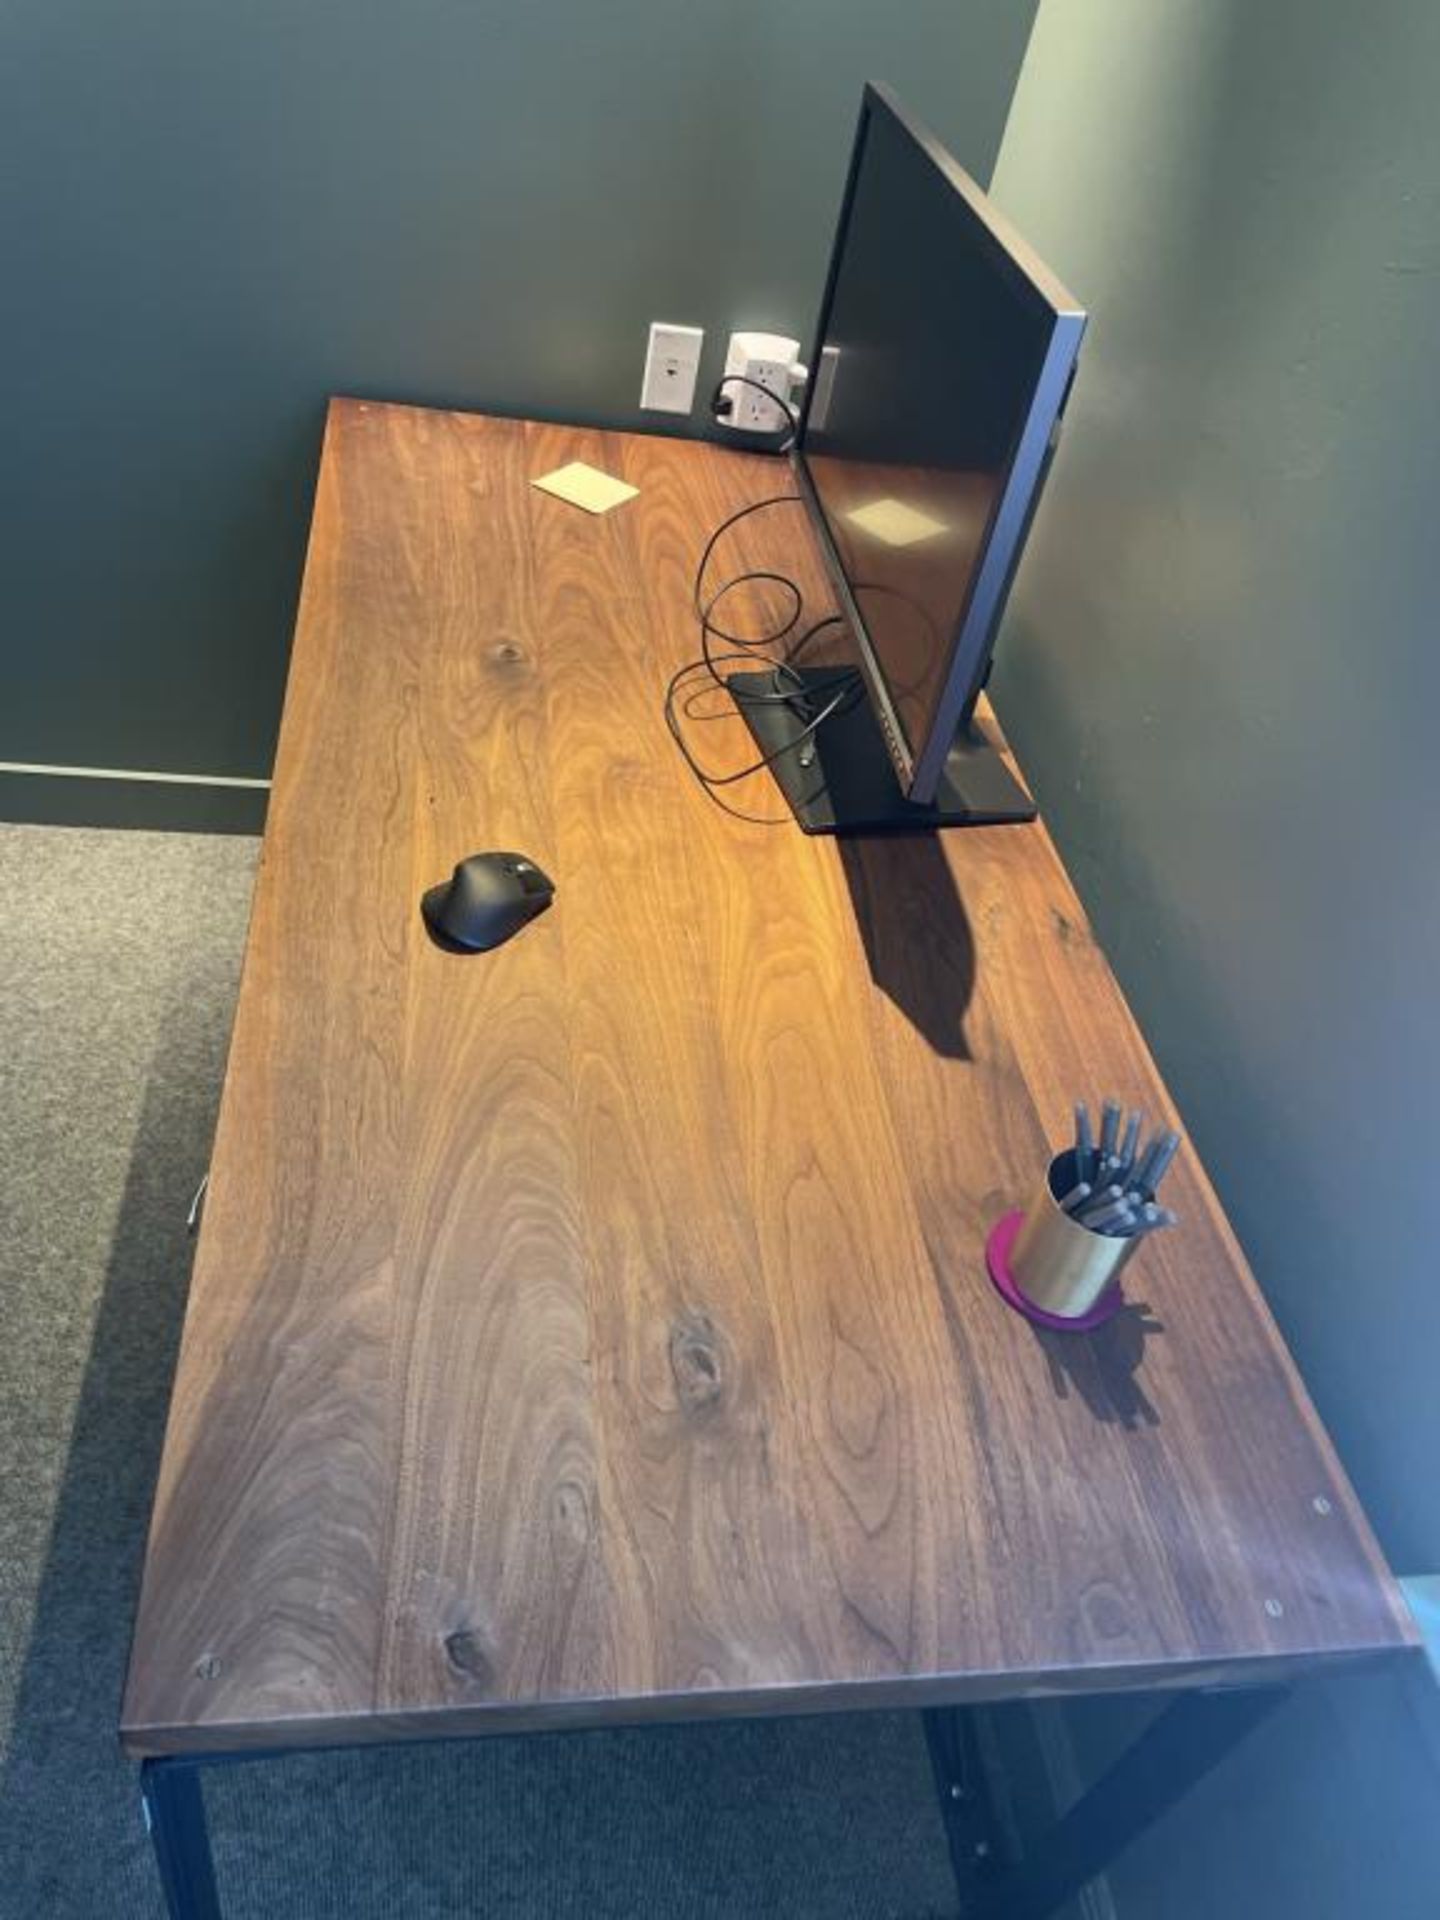 Ohio Design Desk, Wood Top Steel Frame 65"x30" - Image 3 of 5